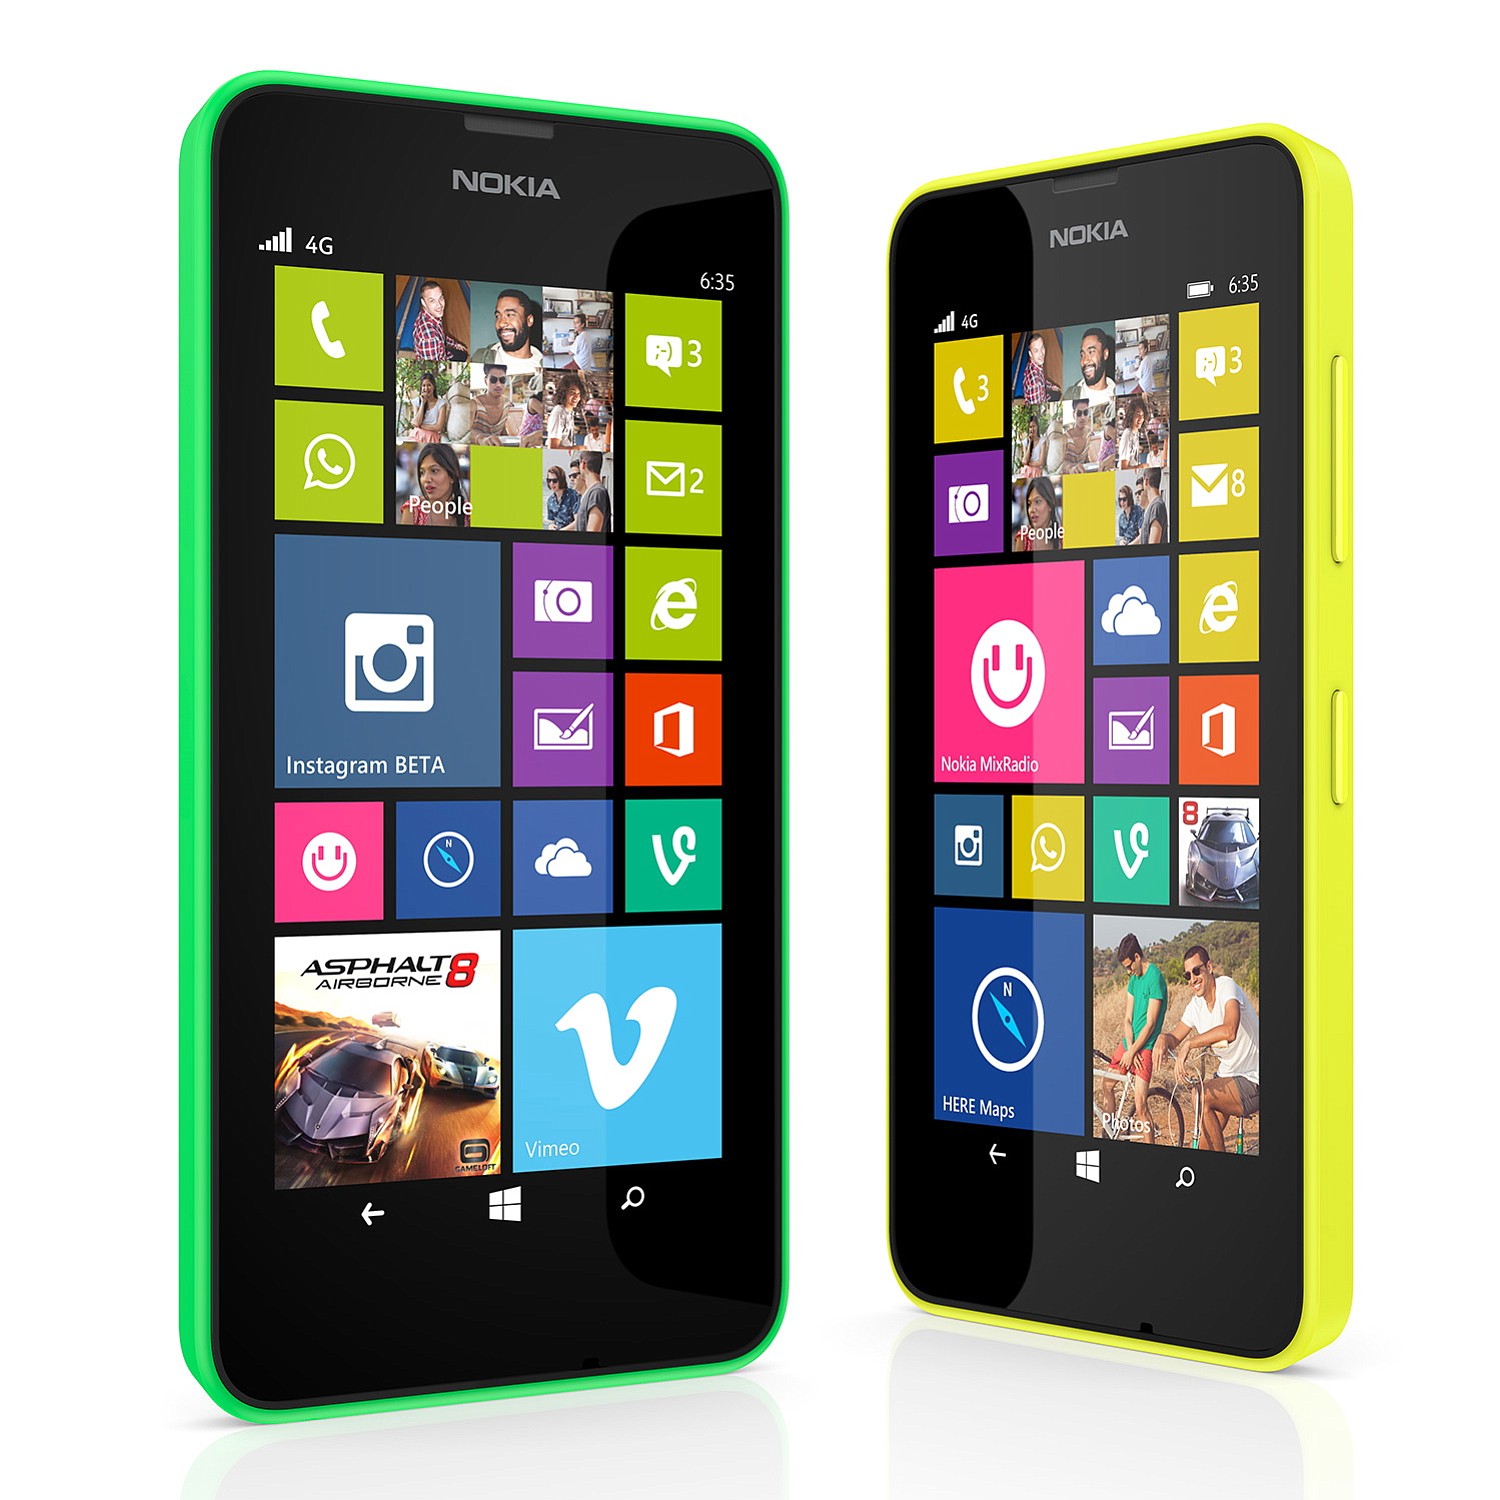 Microsoft's Lumia 635